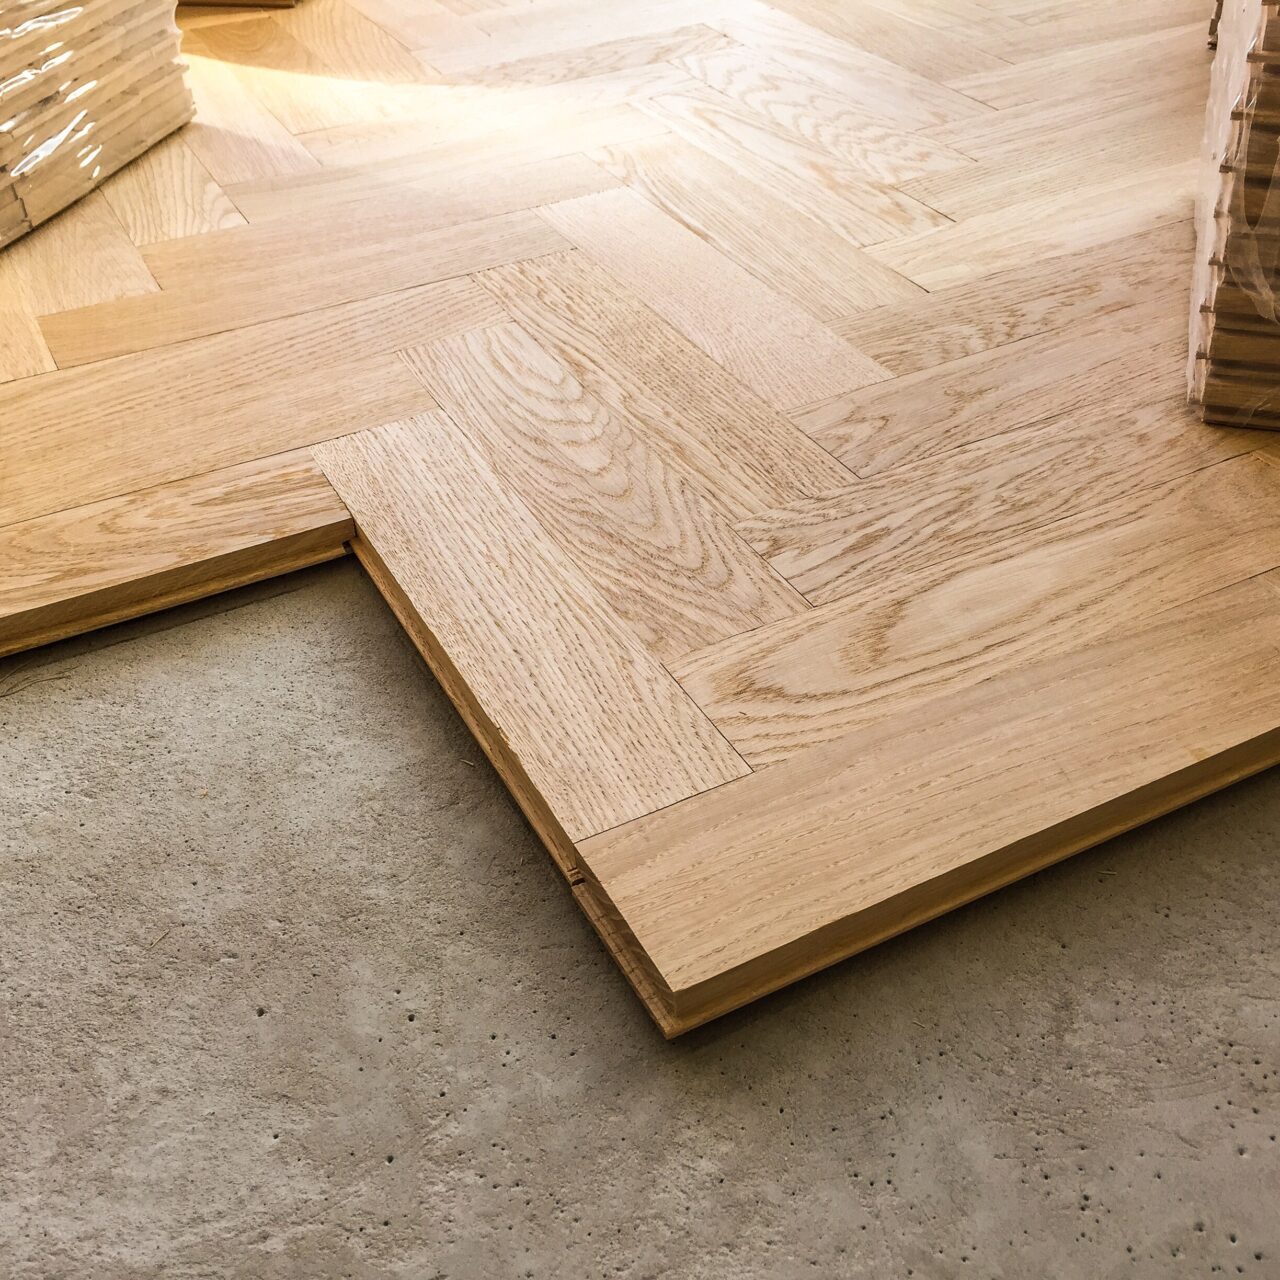 https://renova-home.fr/wp-content/uploads/2021/12/closeup-view-of-wooden-parquet-flooring-being-laid-2021-08-30-18-06-24-utc-1280x1280.jpg